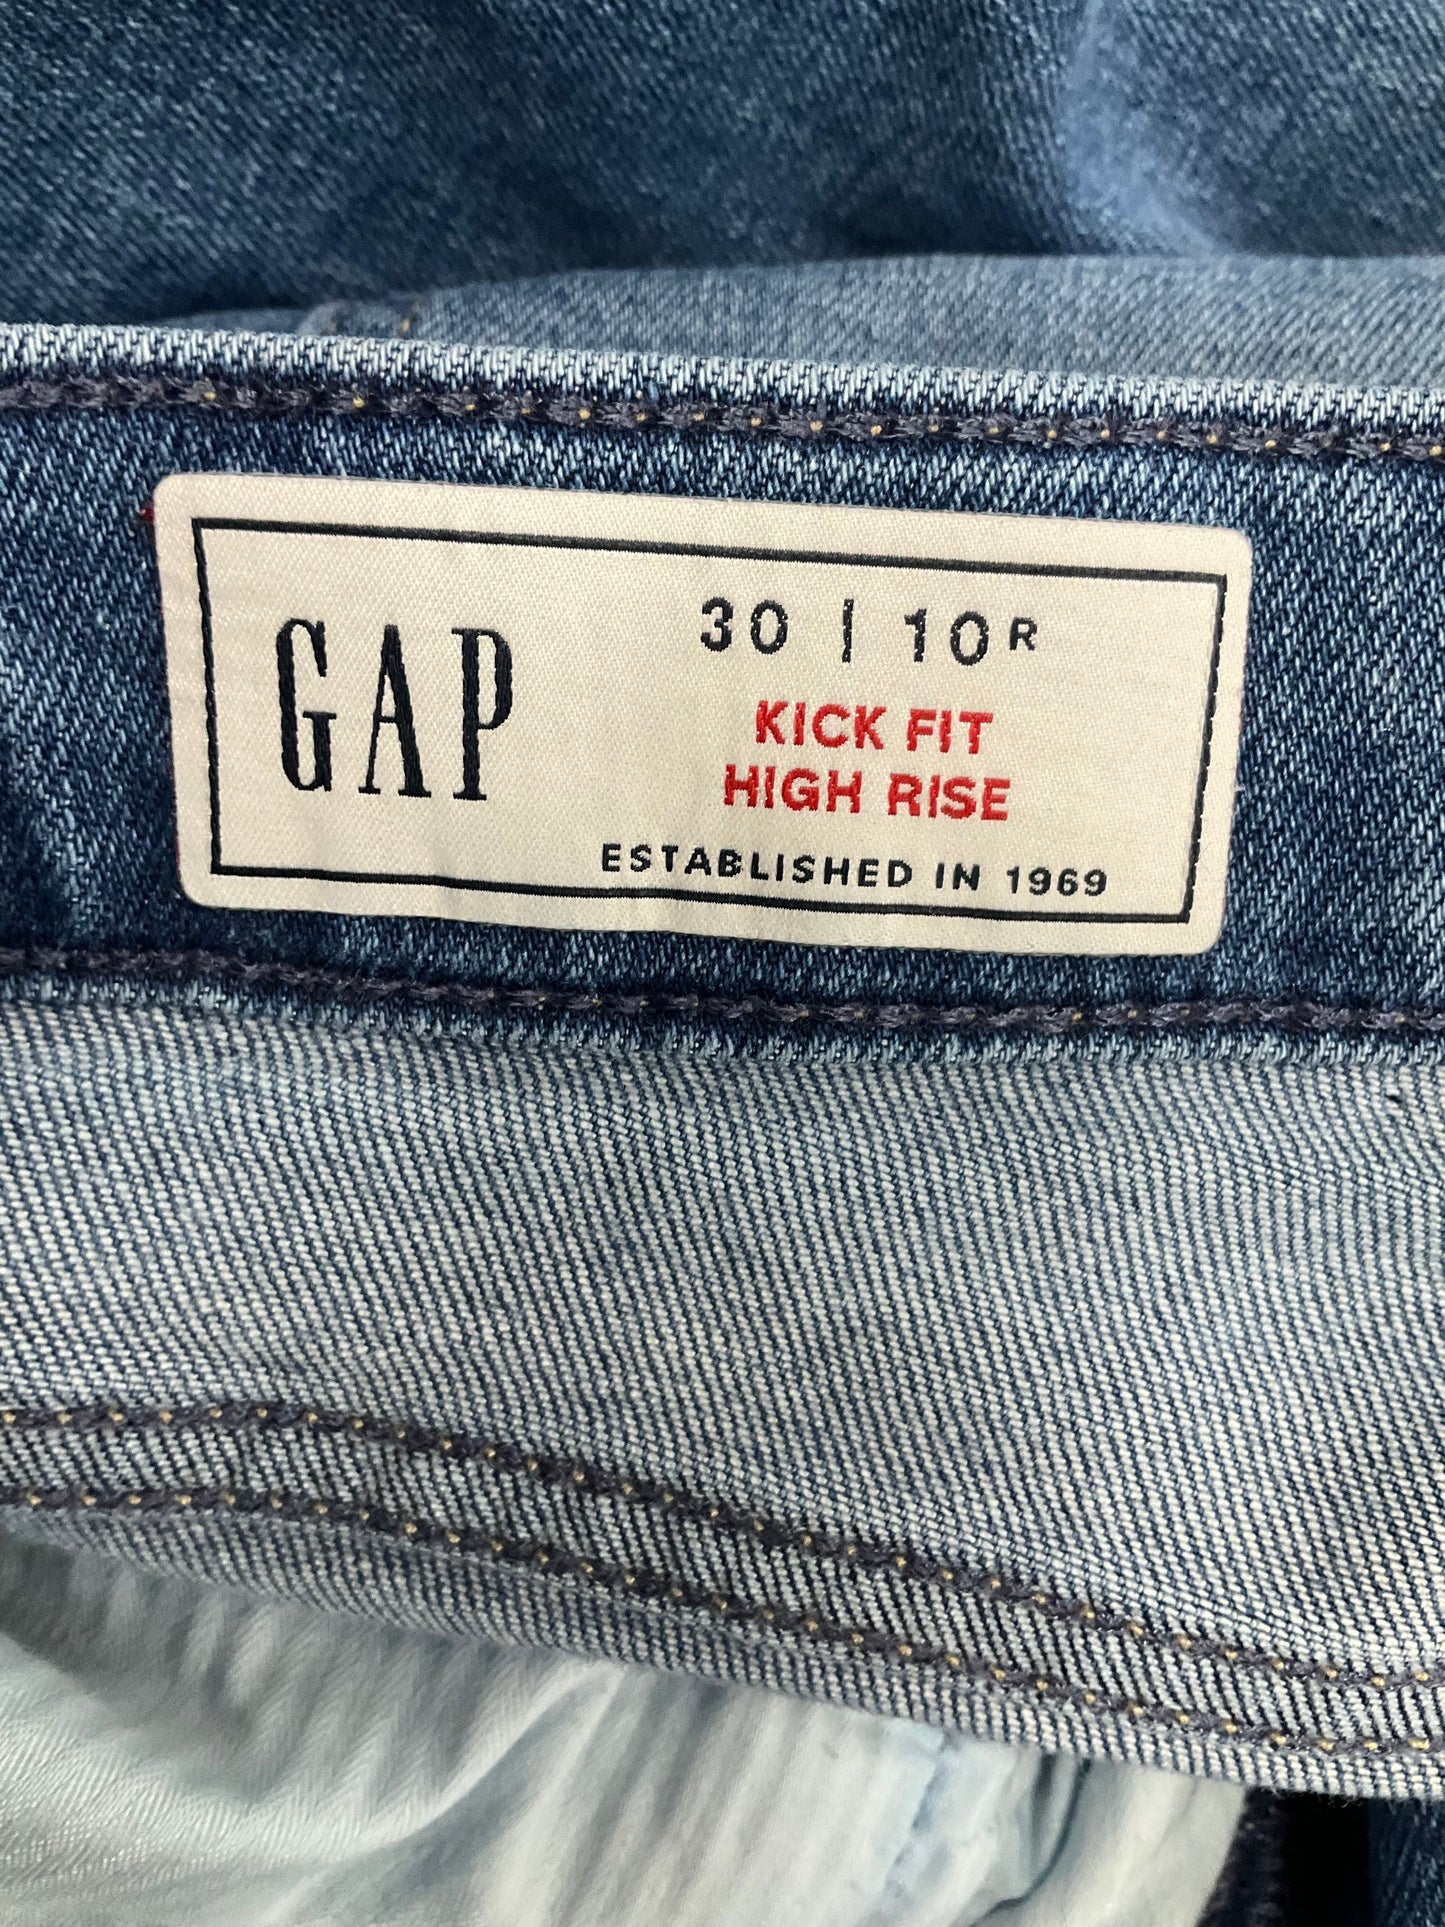 Blue Denim Jeans Straight Gap, Size 10